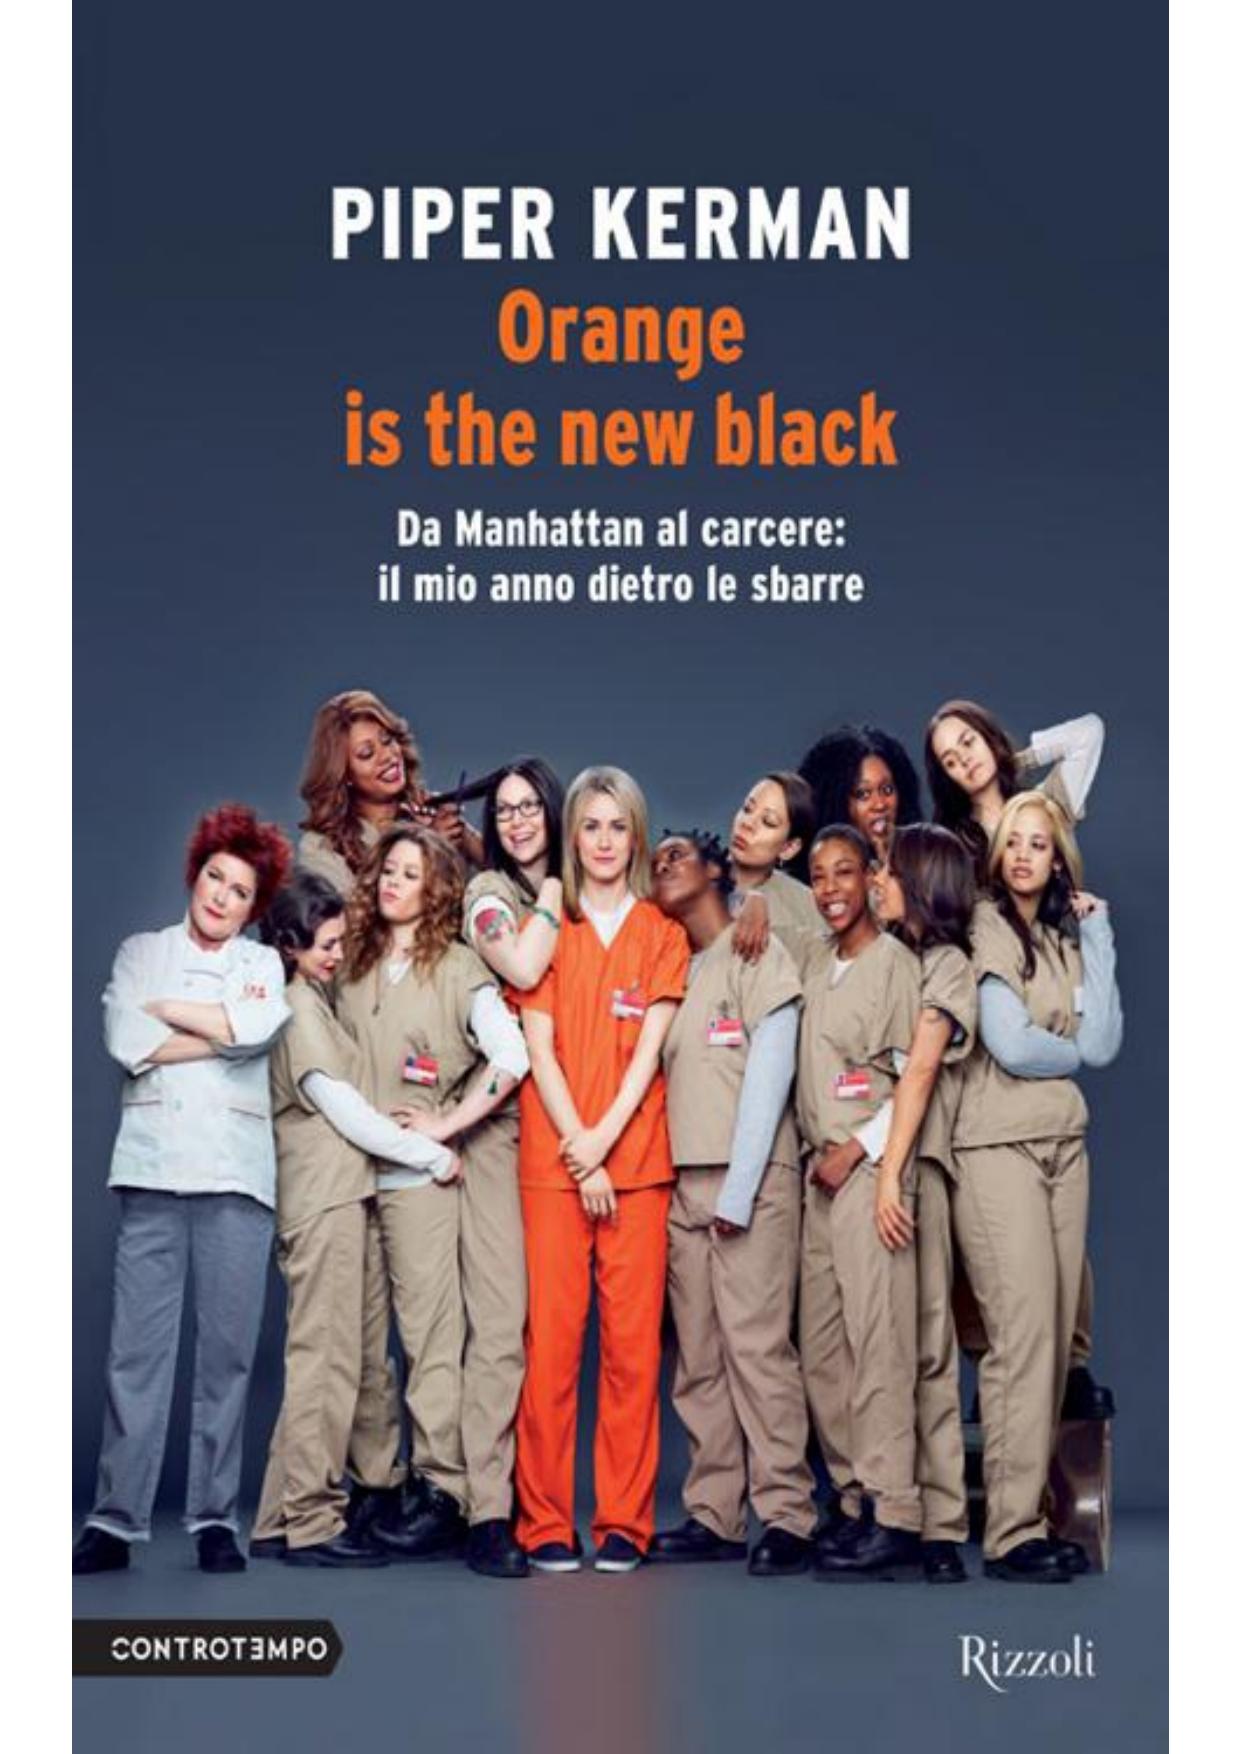 Orange is the new black by Piper Kerman